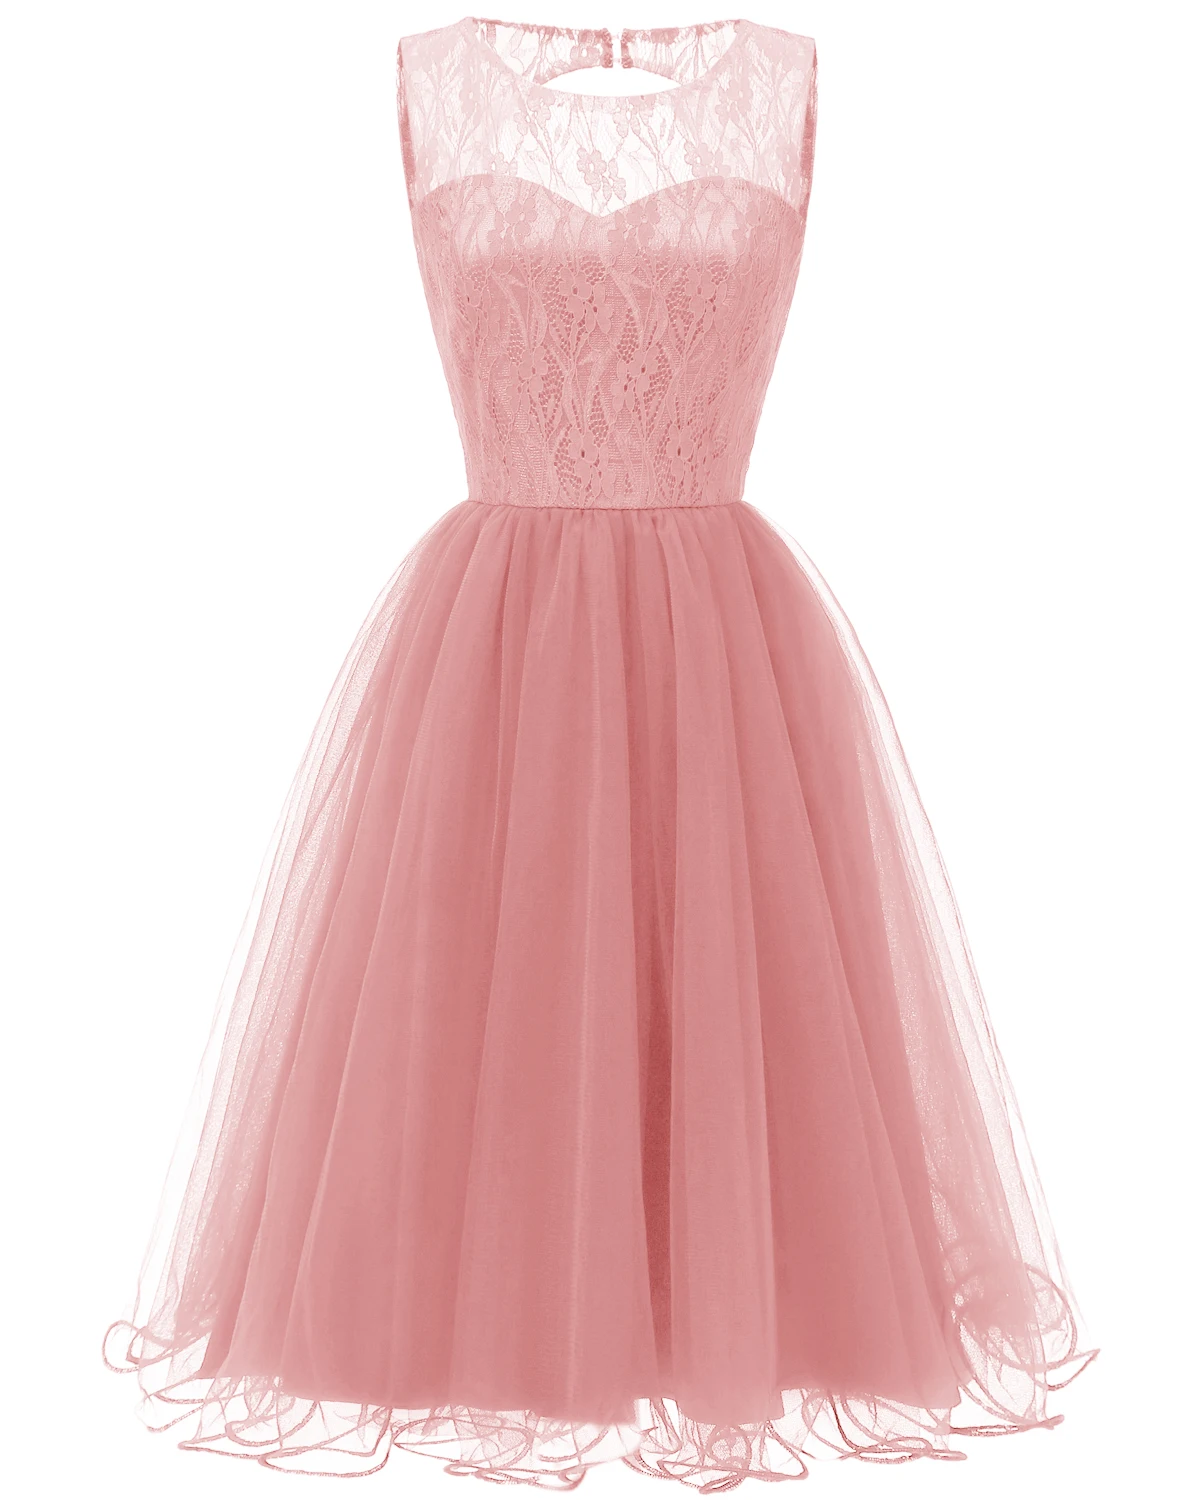 

Illusion Evening Party Dress Pink Cocktail Bridesmaid Dress Elegant Vestidos de Fiesta Robe de Soiree Abendkleider DN-074